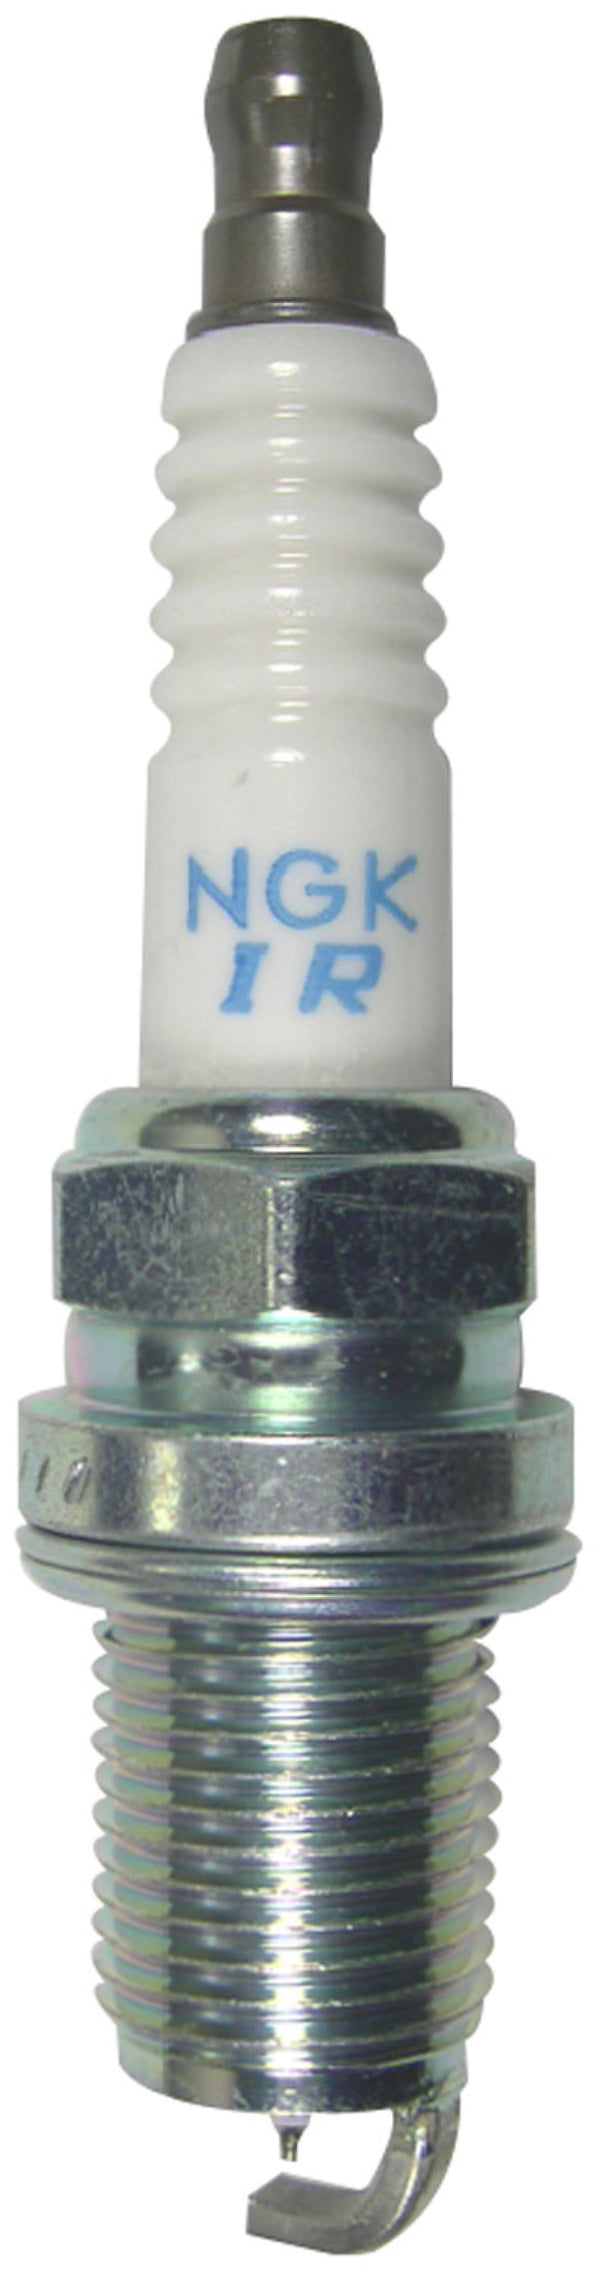 NGK Laser Iridium Spark Plug Box of 4 (IFR5L11)